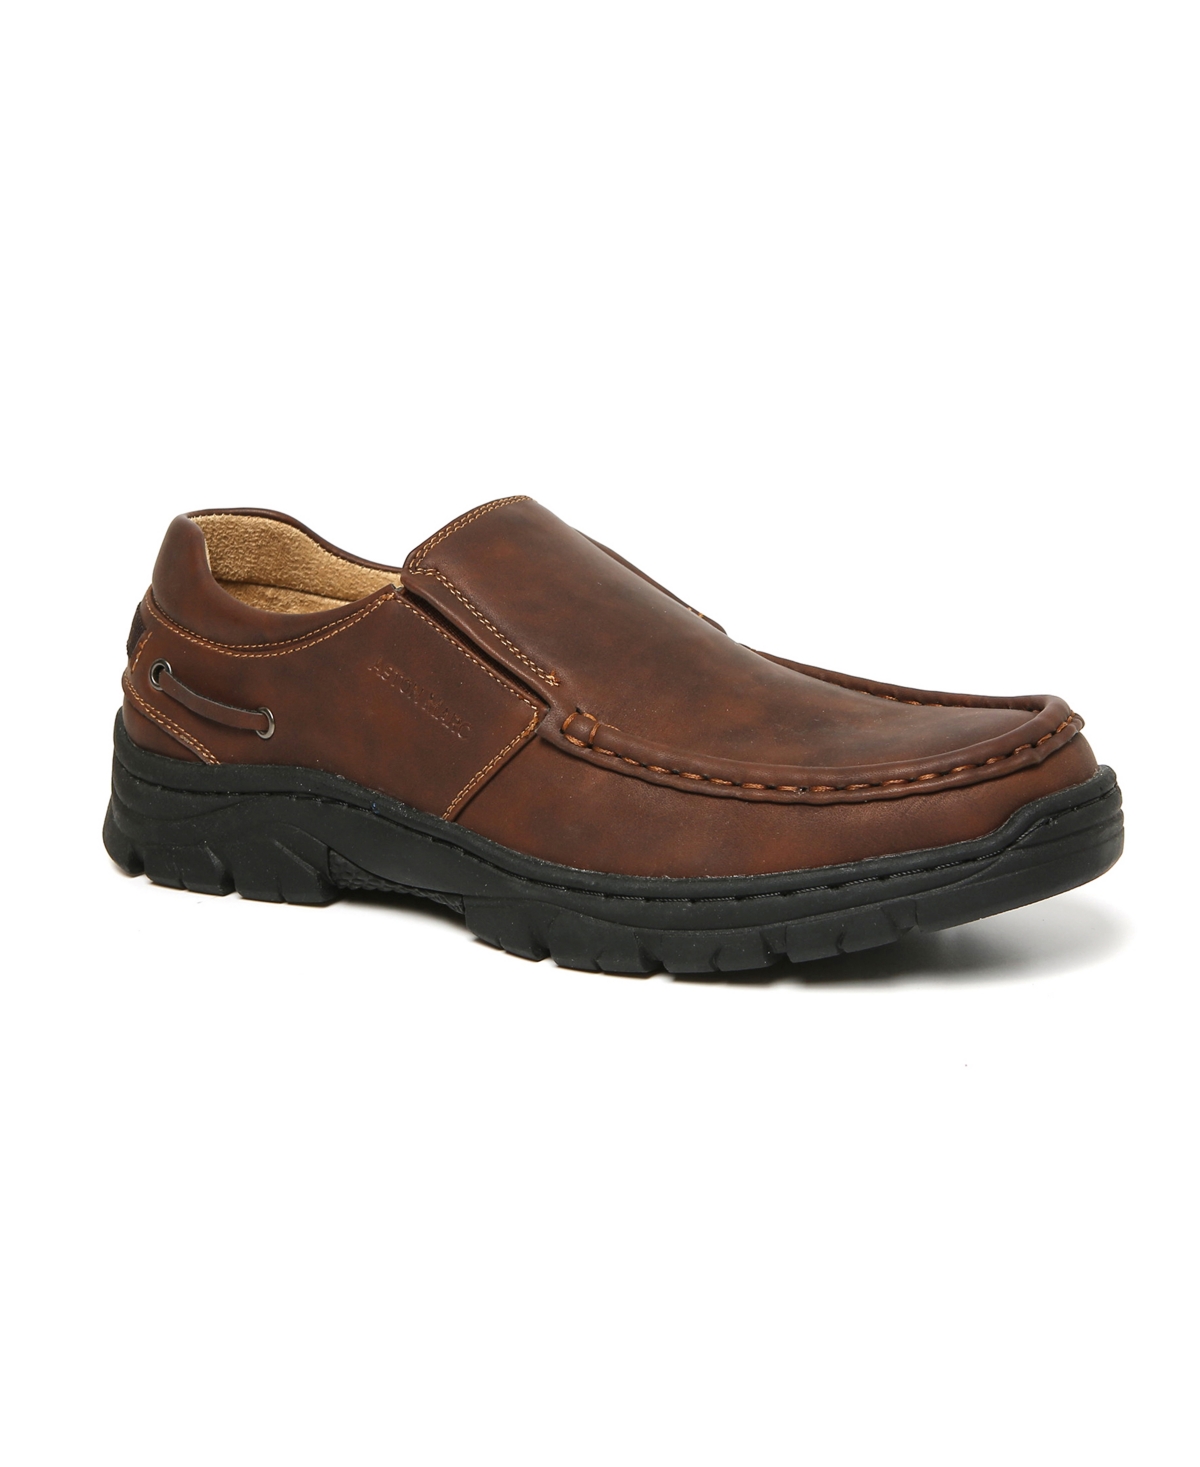 Men's Slip On Comfort Casual Shoes - Tan